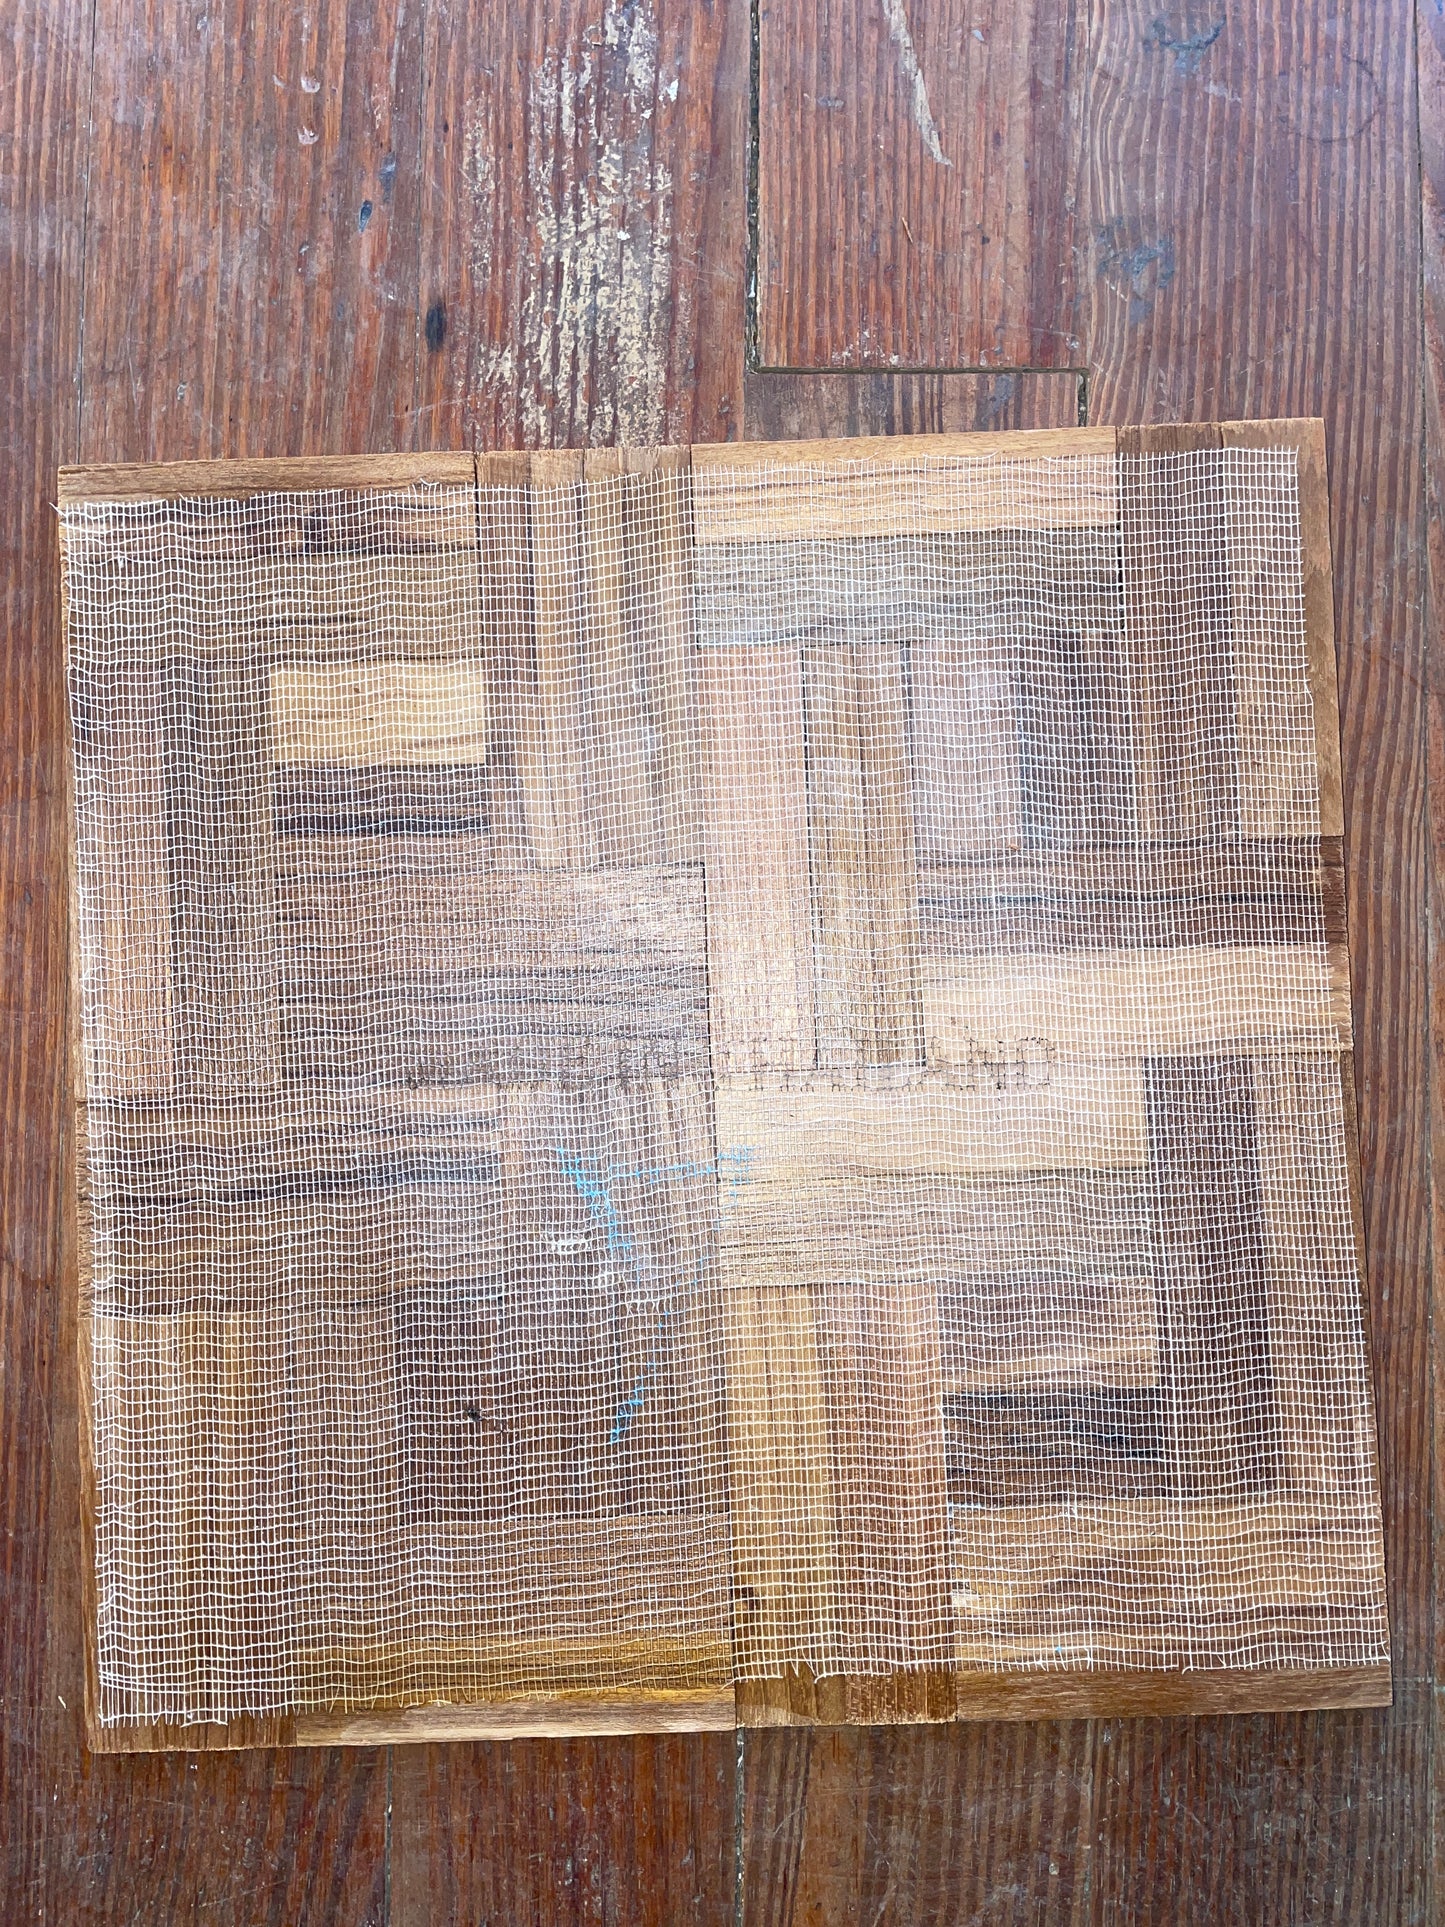 12”x12” Teak Flooring Piece